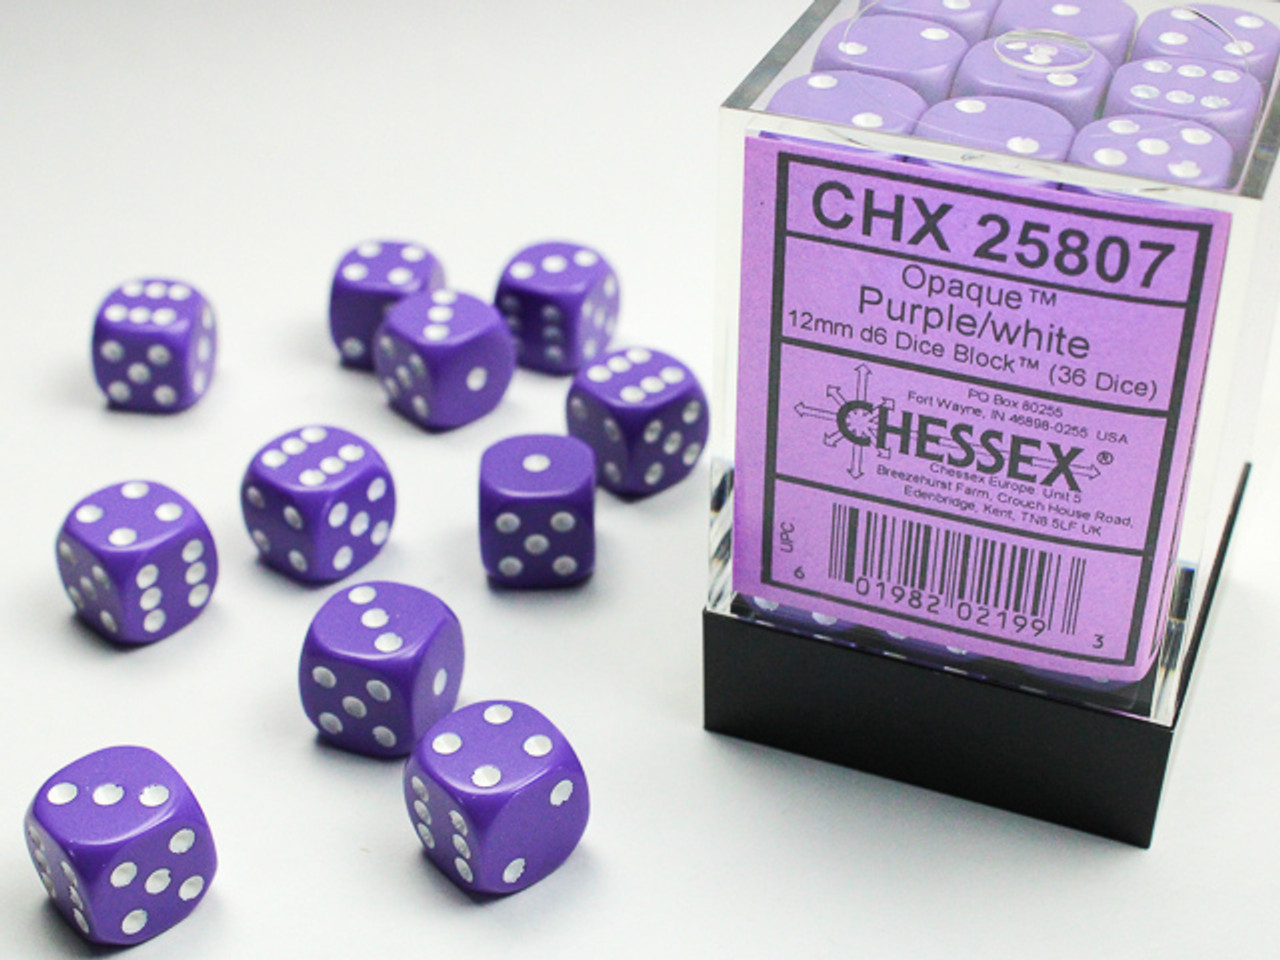 25807 - Opaque 12mm d6 Purple/white Dice Block™ (36 dice)